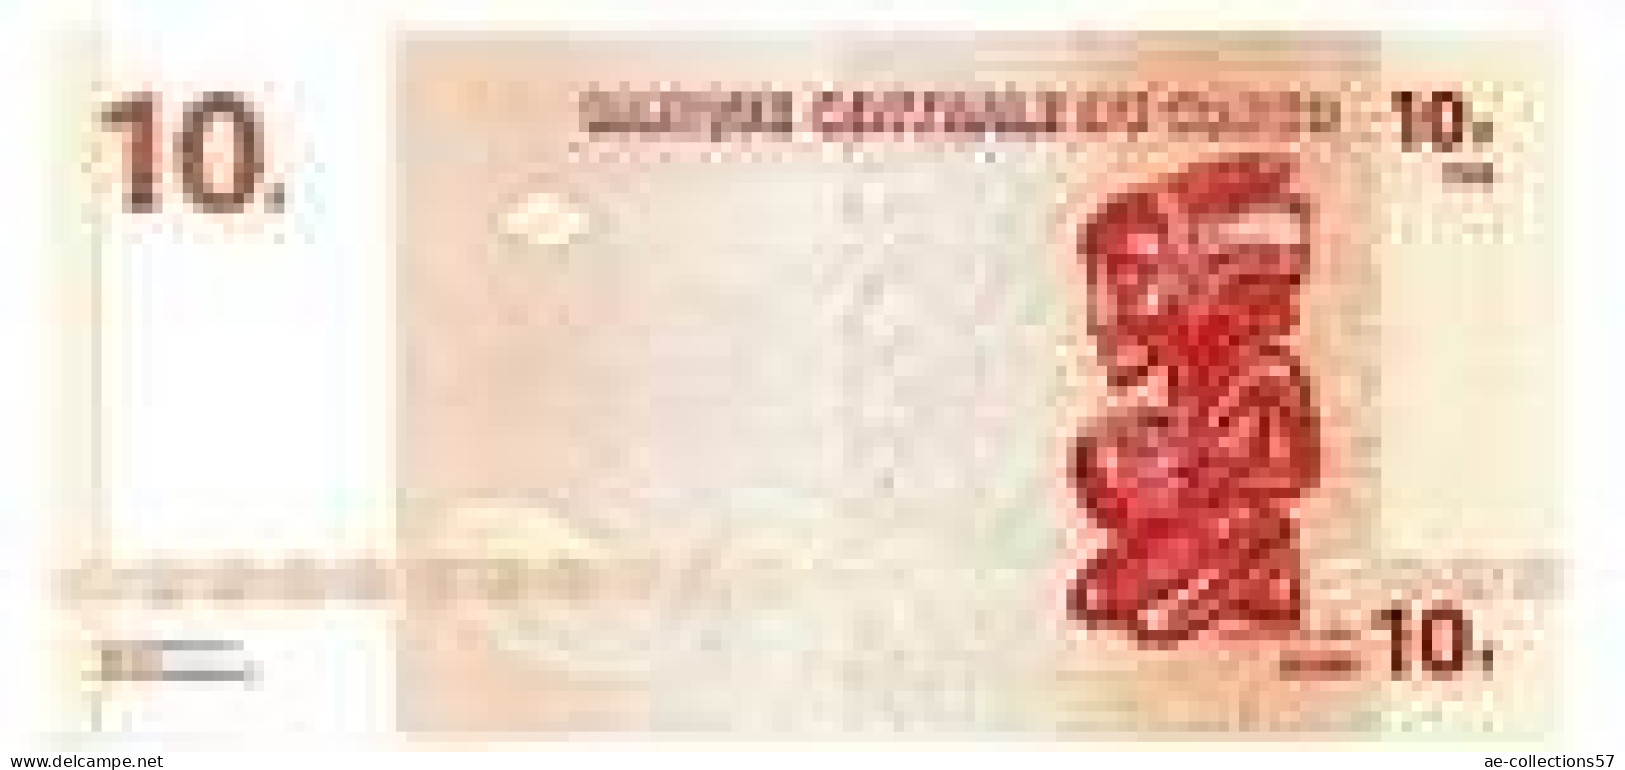 MA 26203 / Congo 10 Francs 30/06/2003 UNC - Unclassified